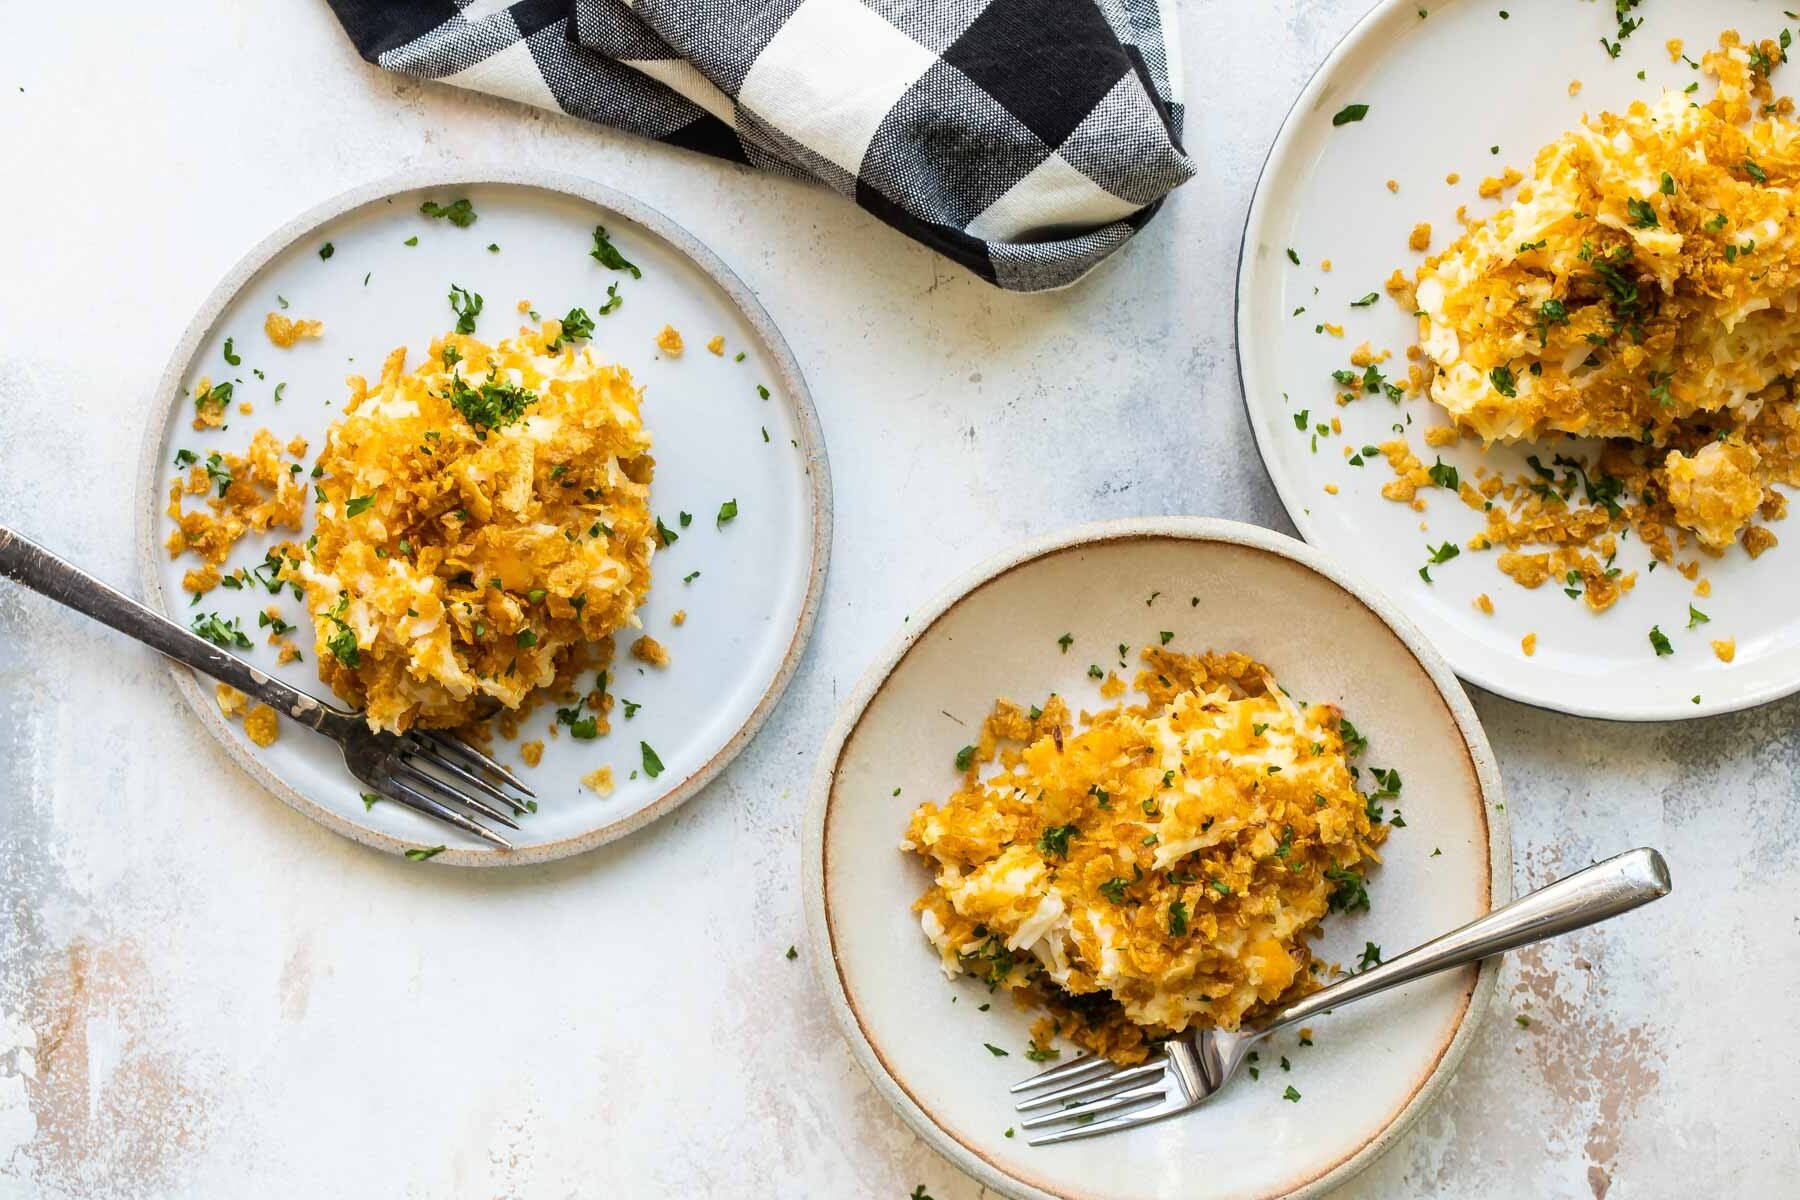 A pile of cheesy potato casserole on a plate.